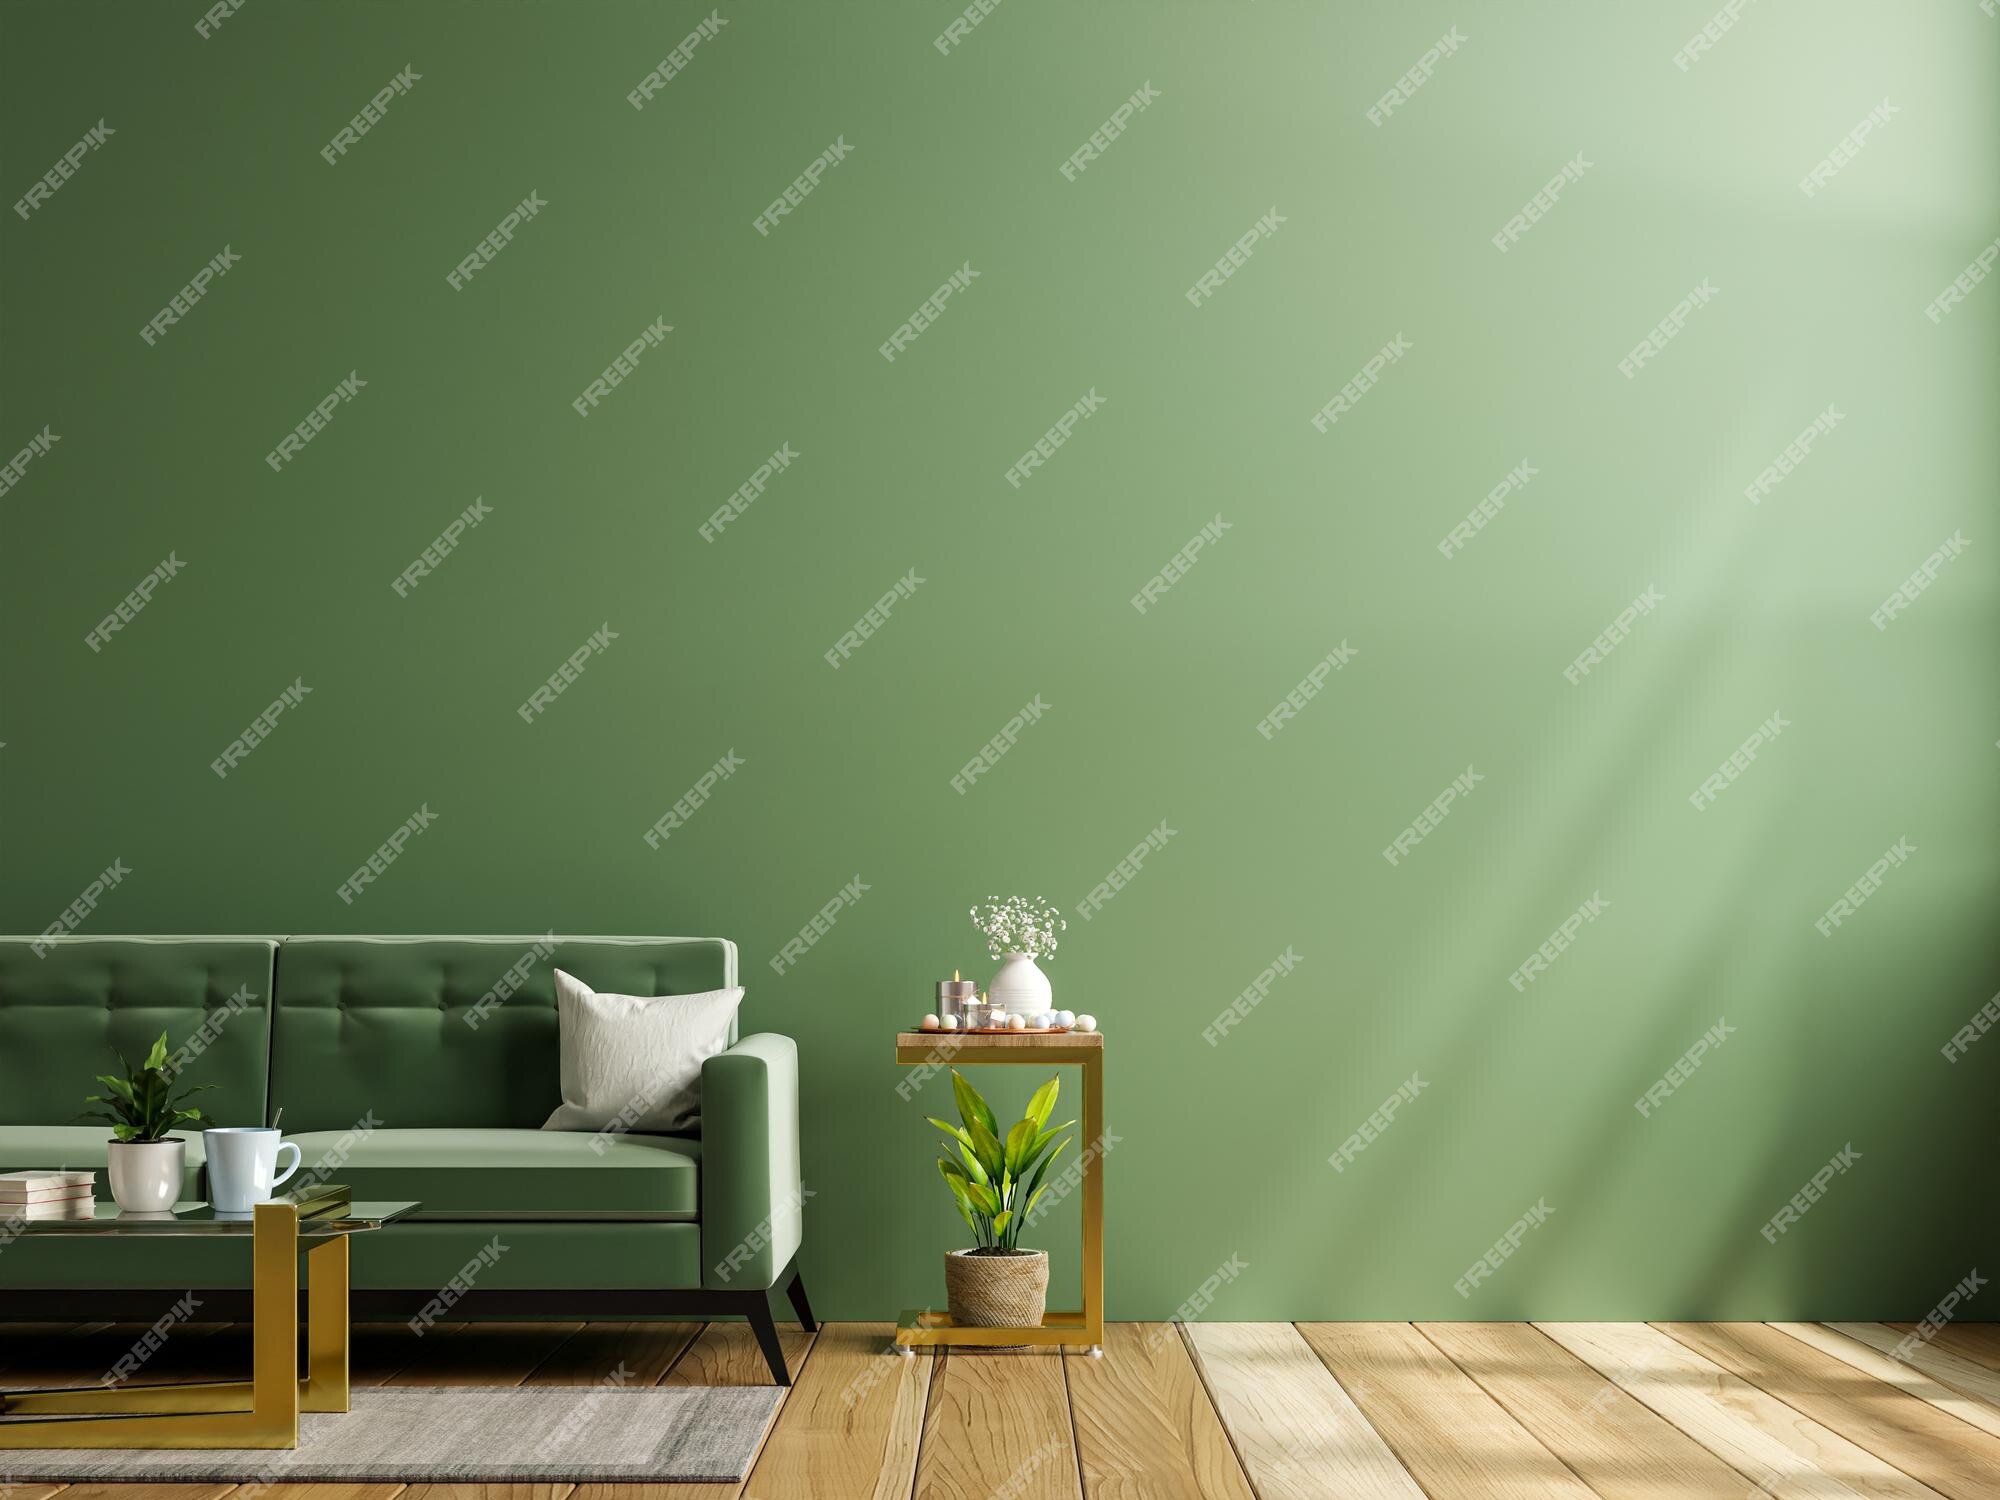 Premium Photo | Livingroom interior green wall mock up with green ...